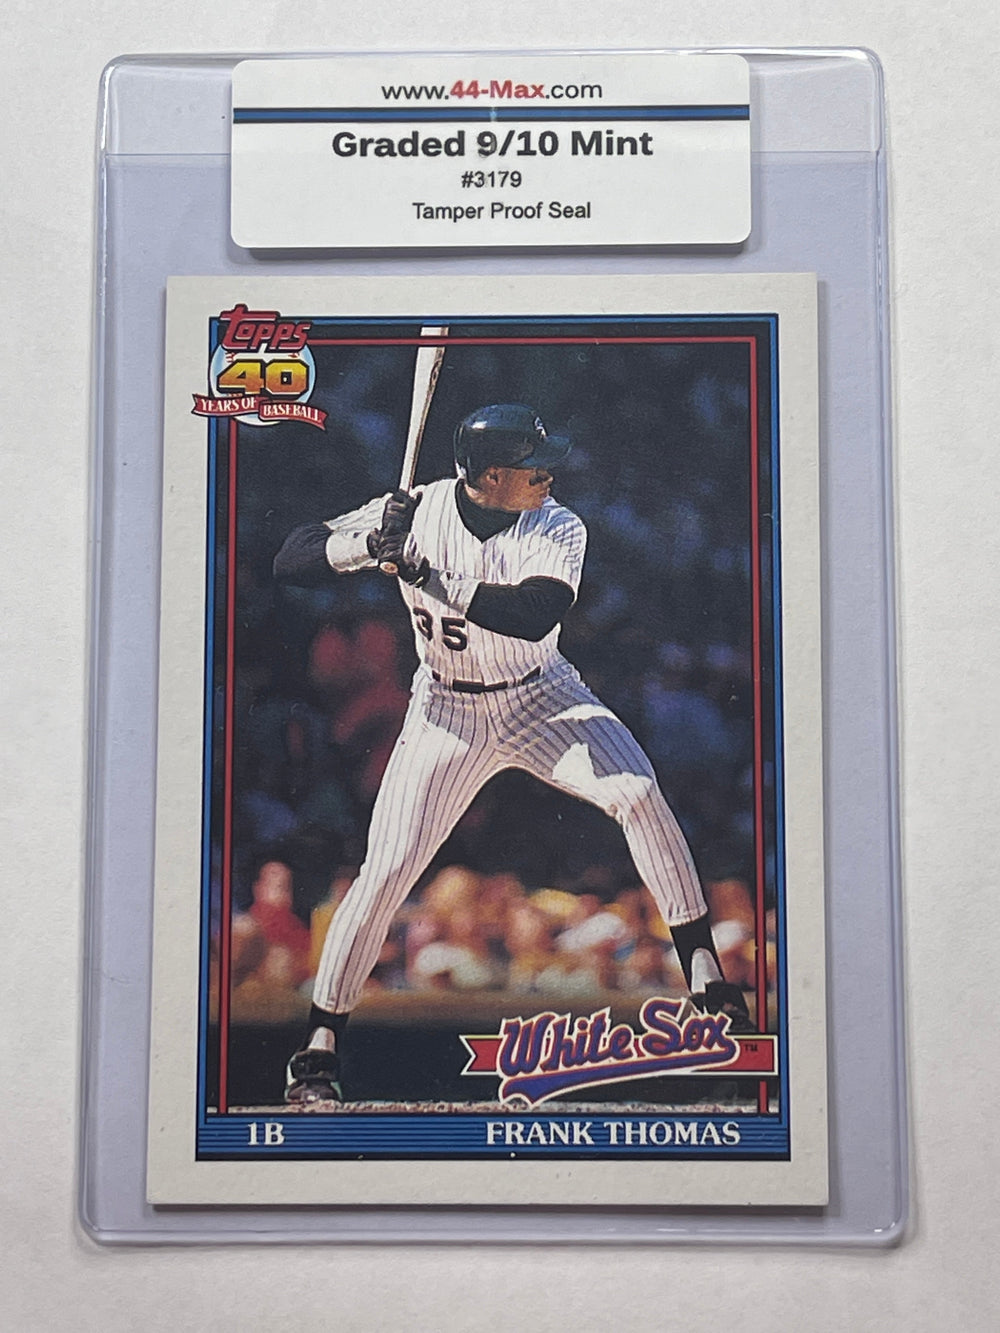 Frank Thomas 1991 Topps Baseball Card. 44-Max 9/10 MINT #3179